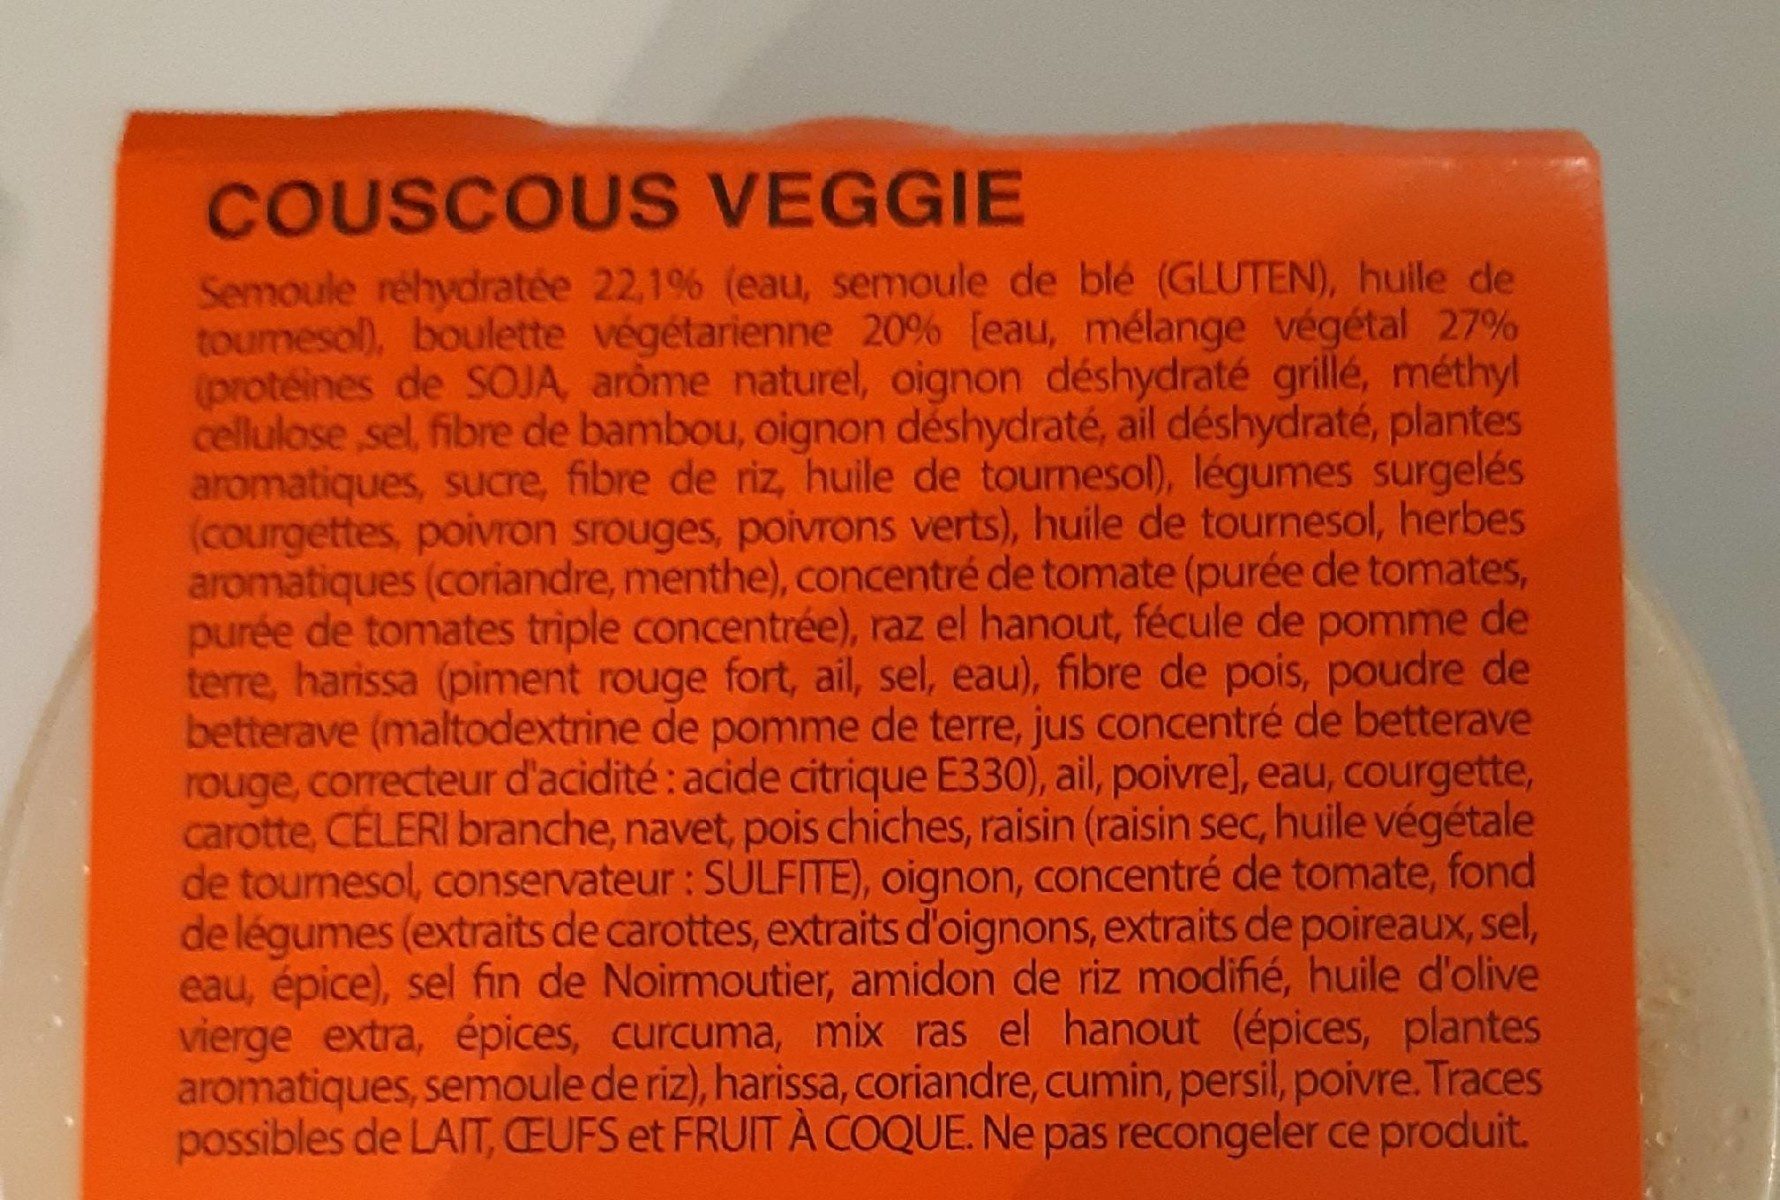 Couscous veggie - Ingredients - fr